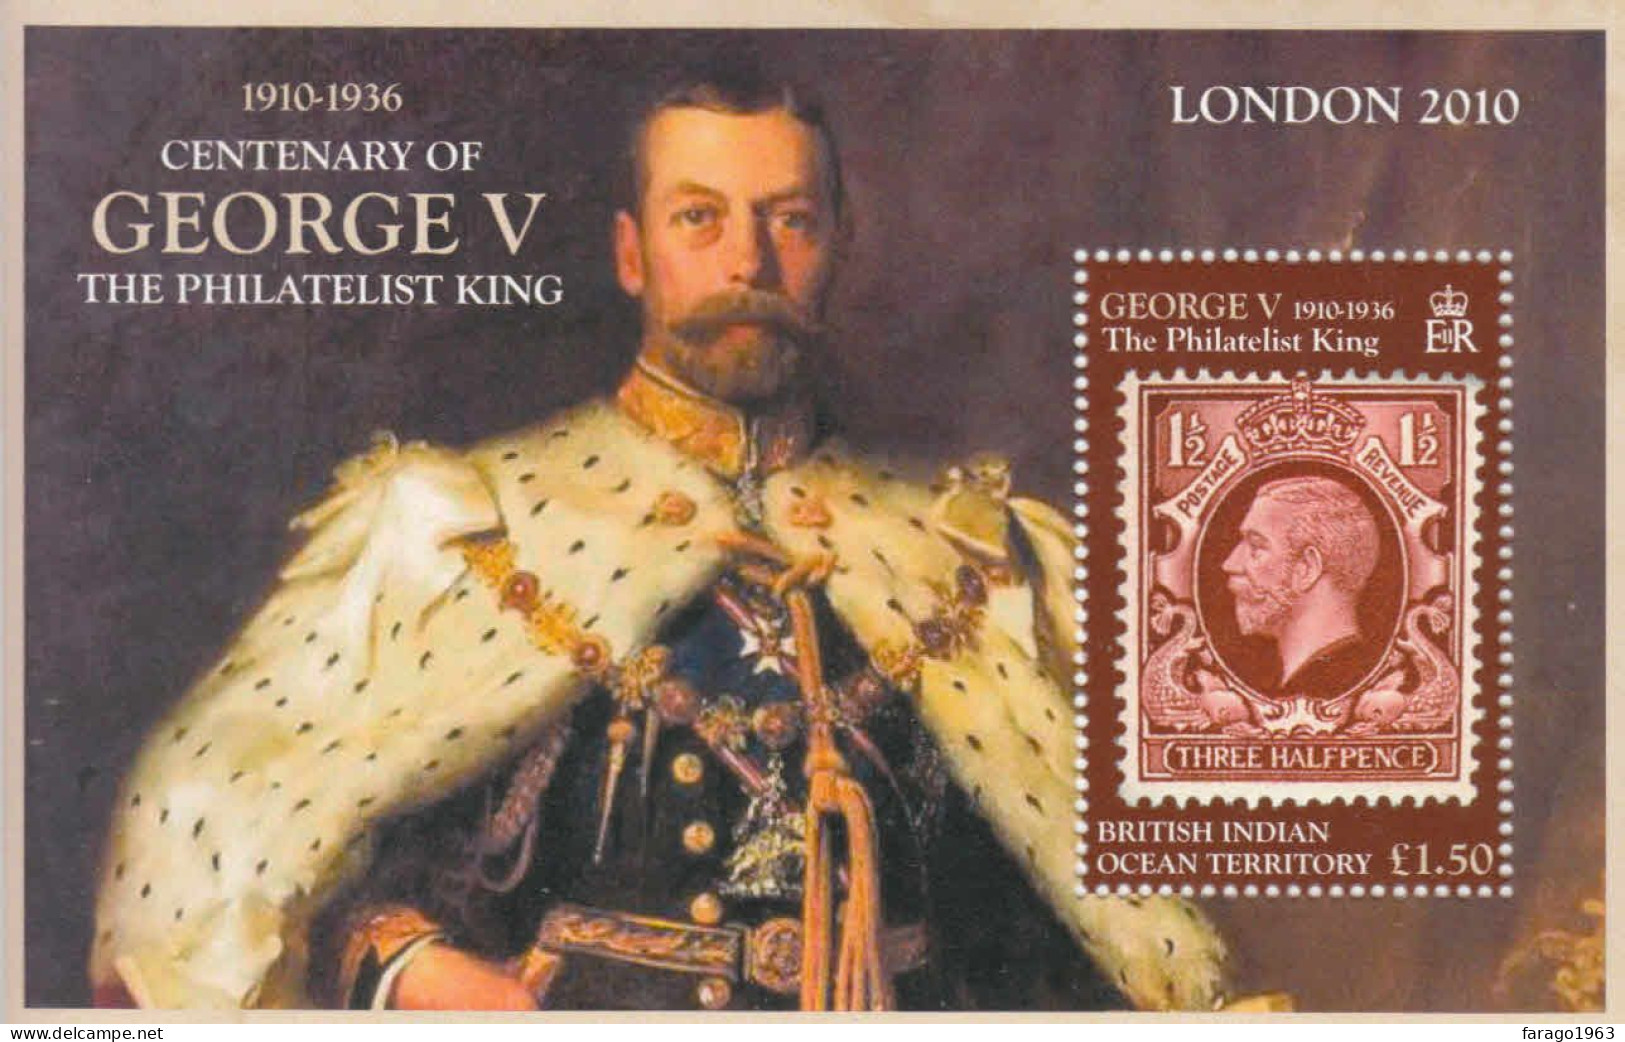 2010 British Indian Ocean Territory King George V Souvenir Sheet  MNH - British Indian Ocean Territory (BIOT)